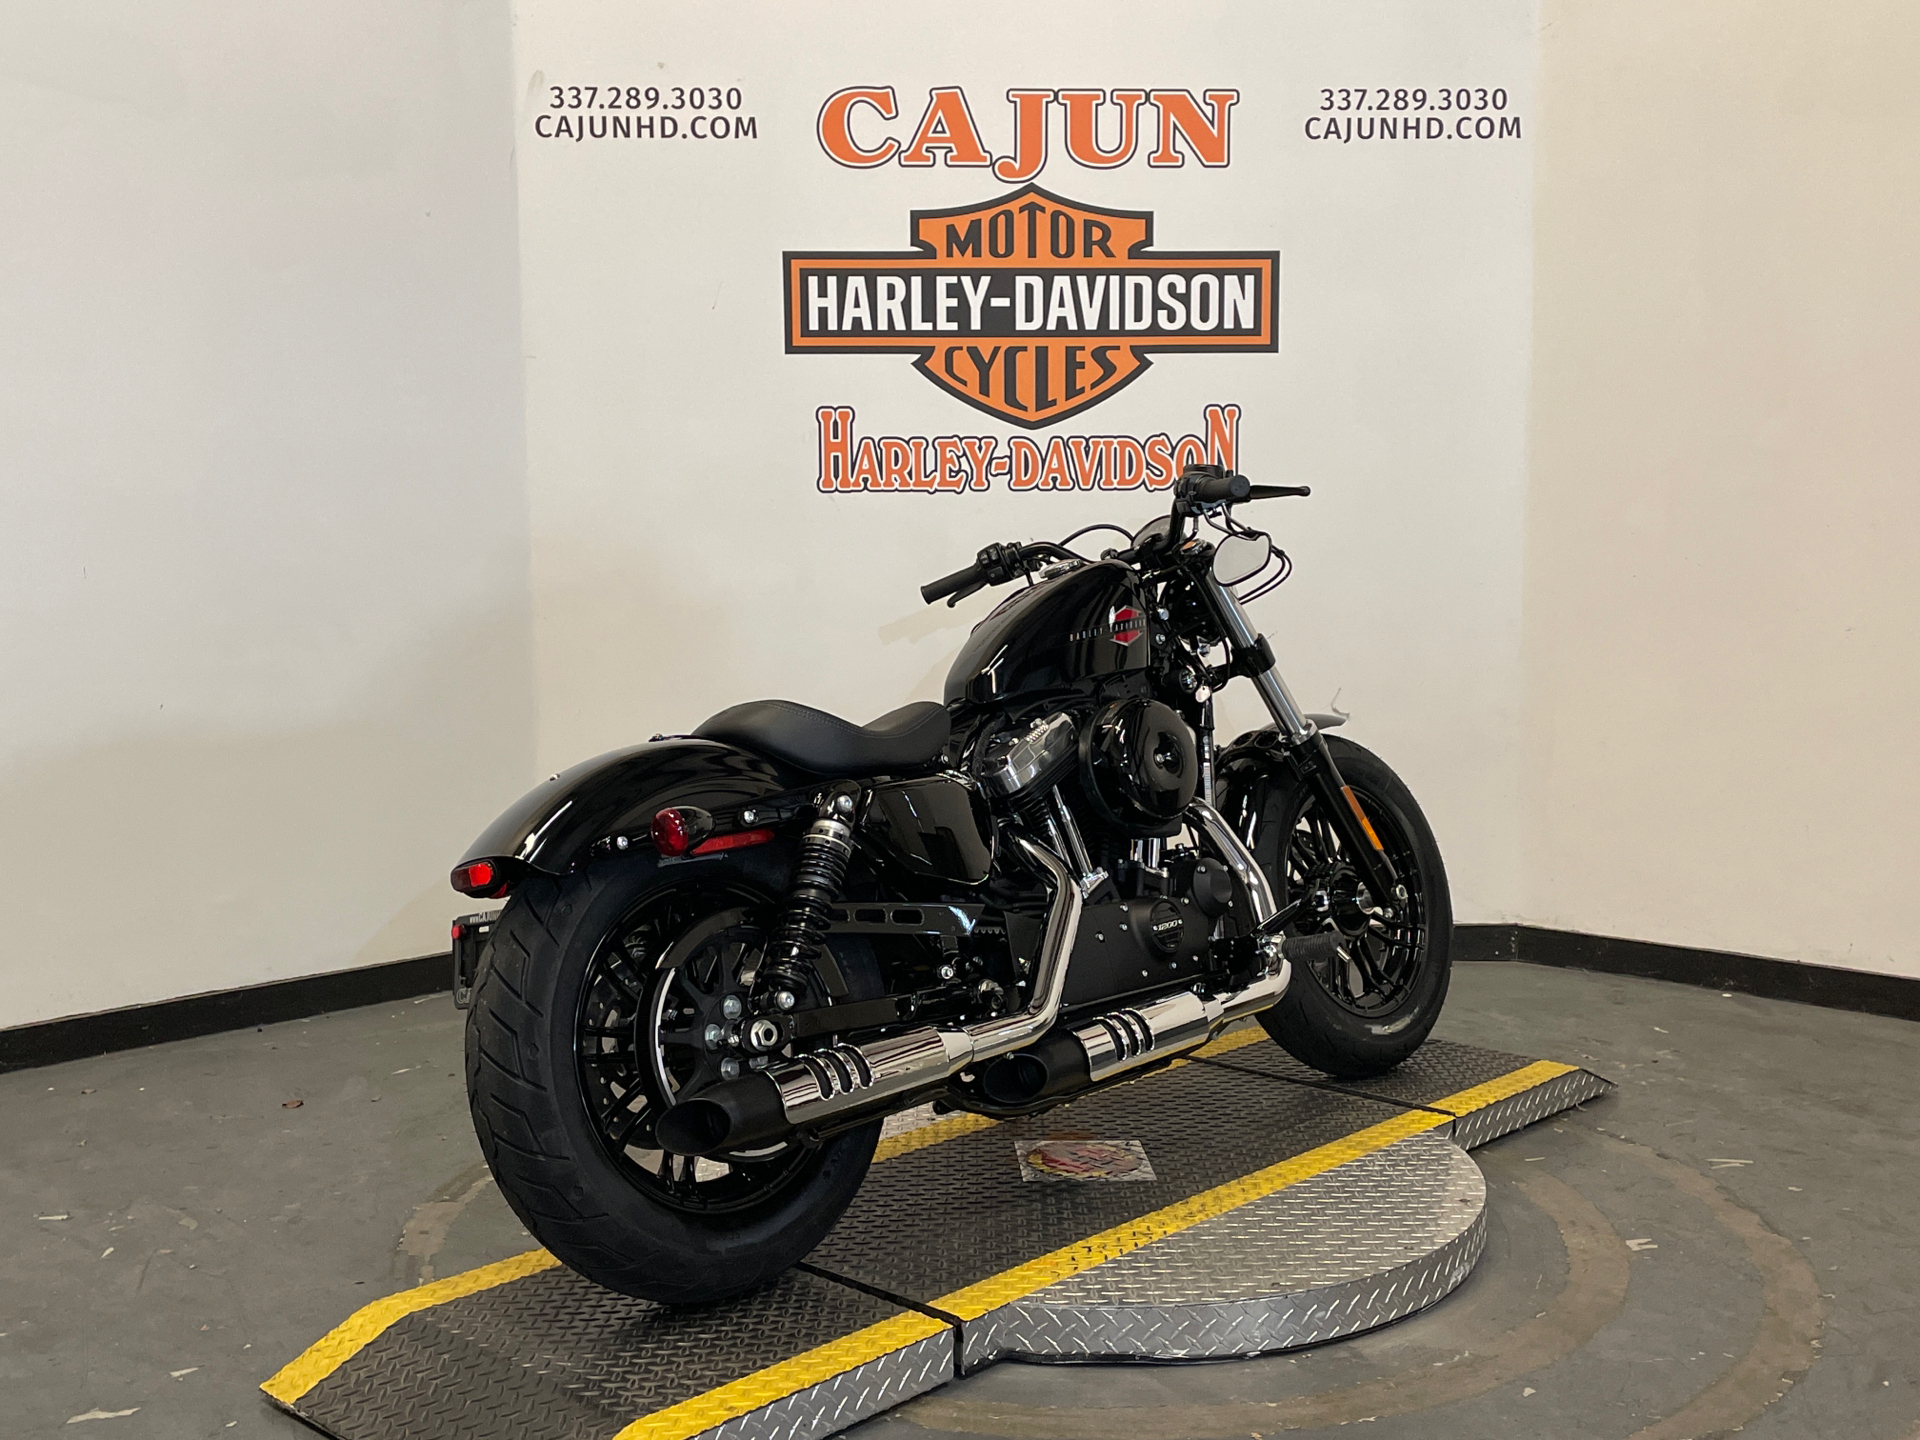 2021 Harley-Davidson Forty-Eight near me - Photo 6